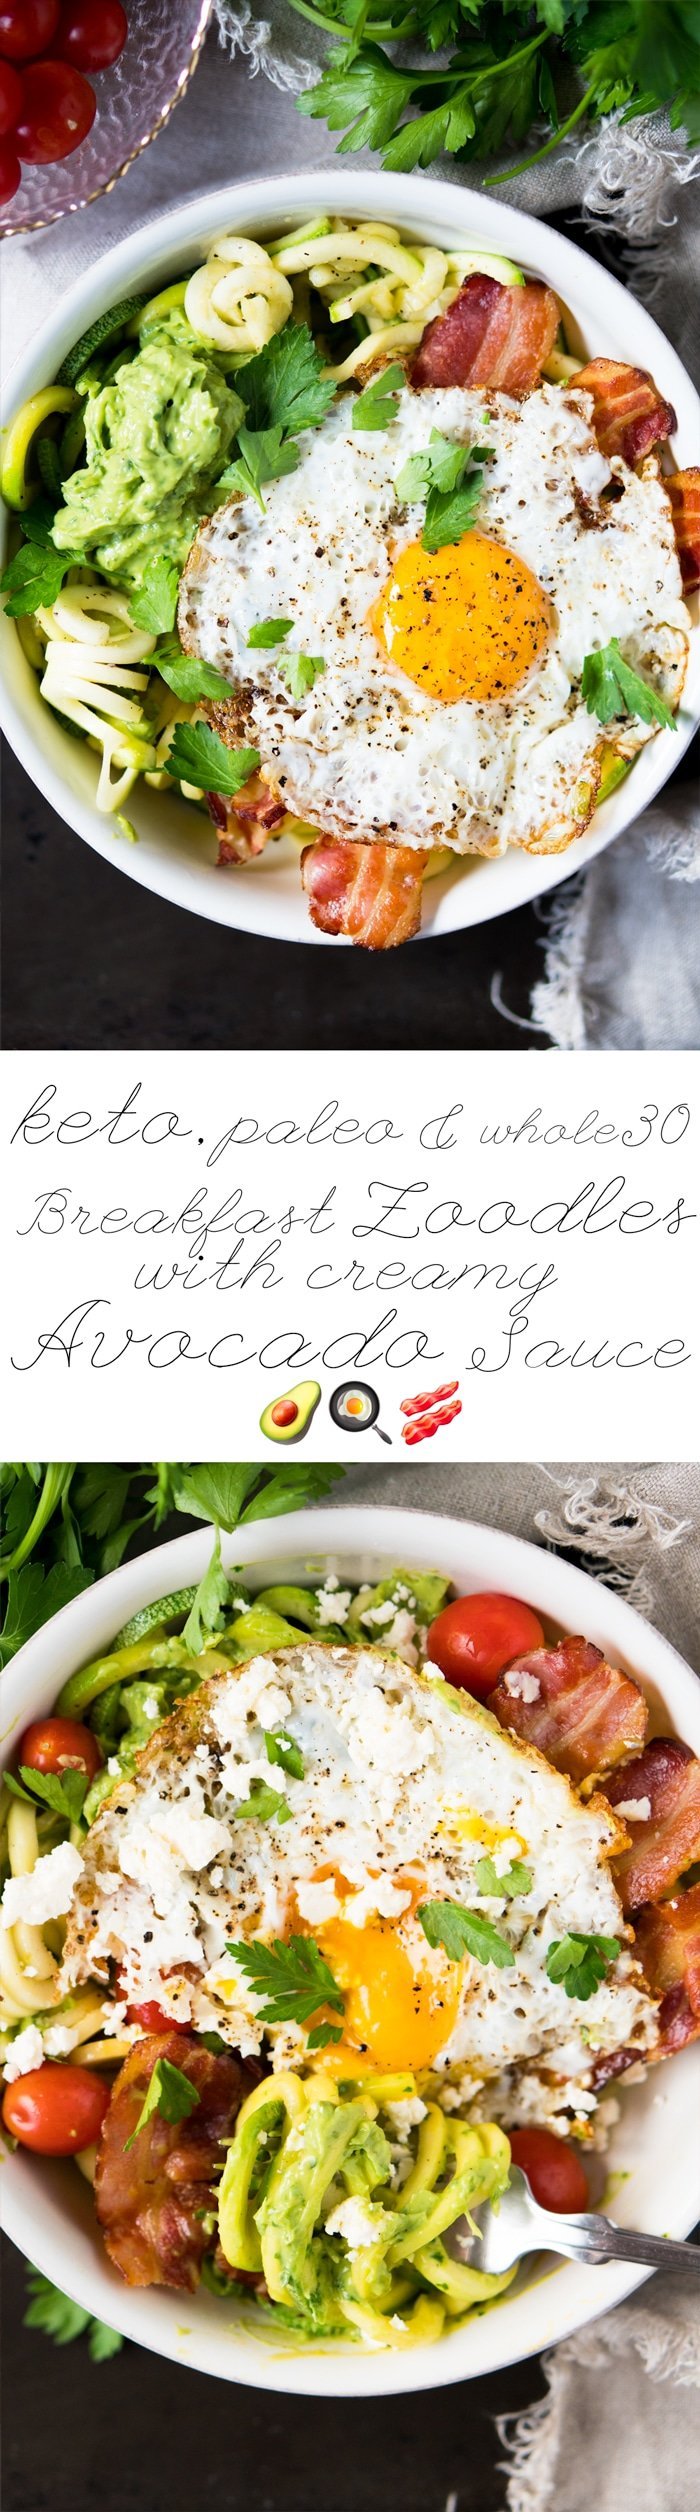 Paleo, Whole30 & Keto Breakfast Zoodles 🥓🍳🥑 with creamy avocado sauce! #ketobreakfast #whole30